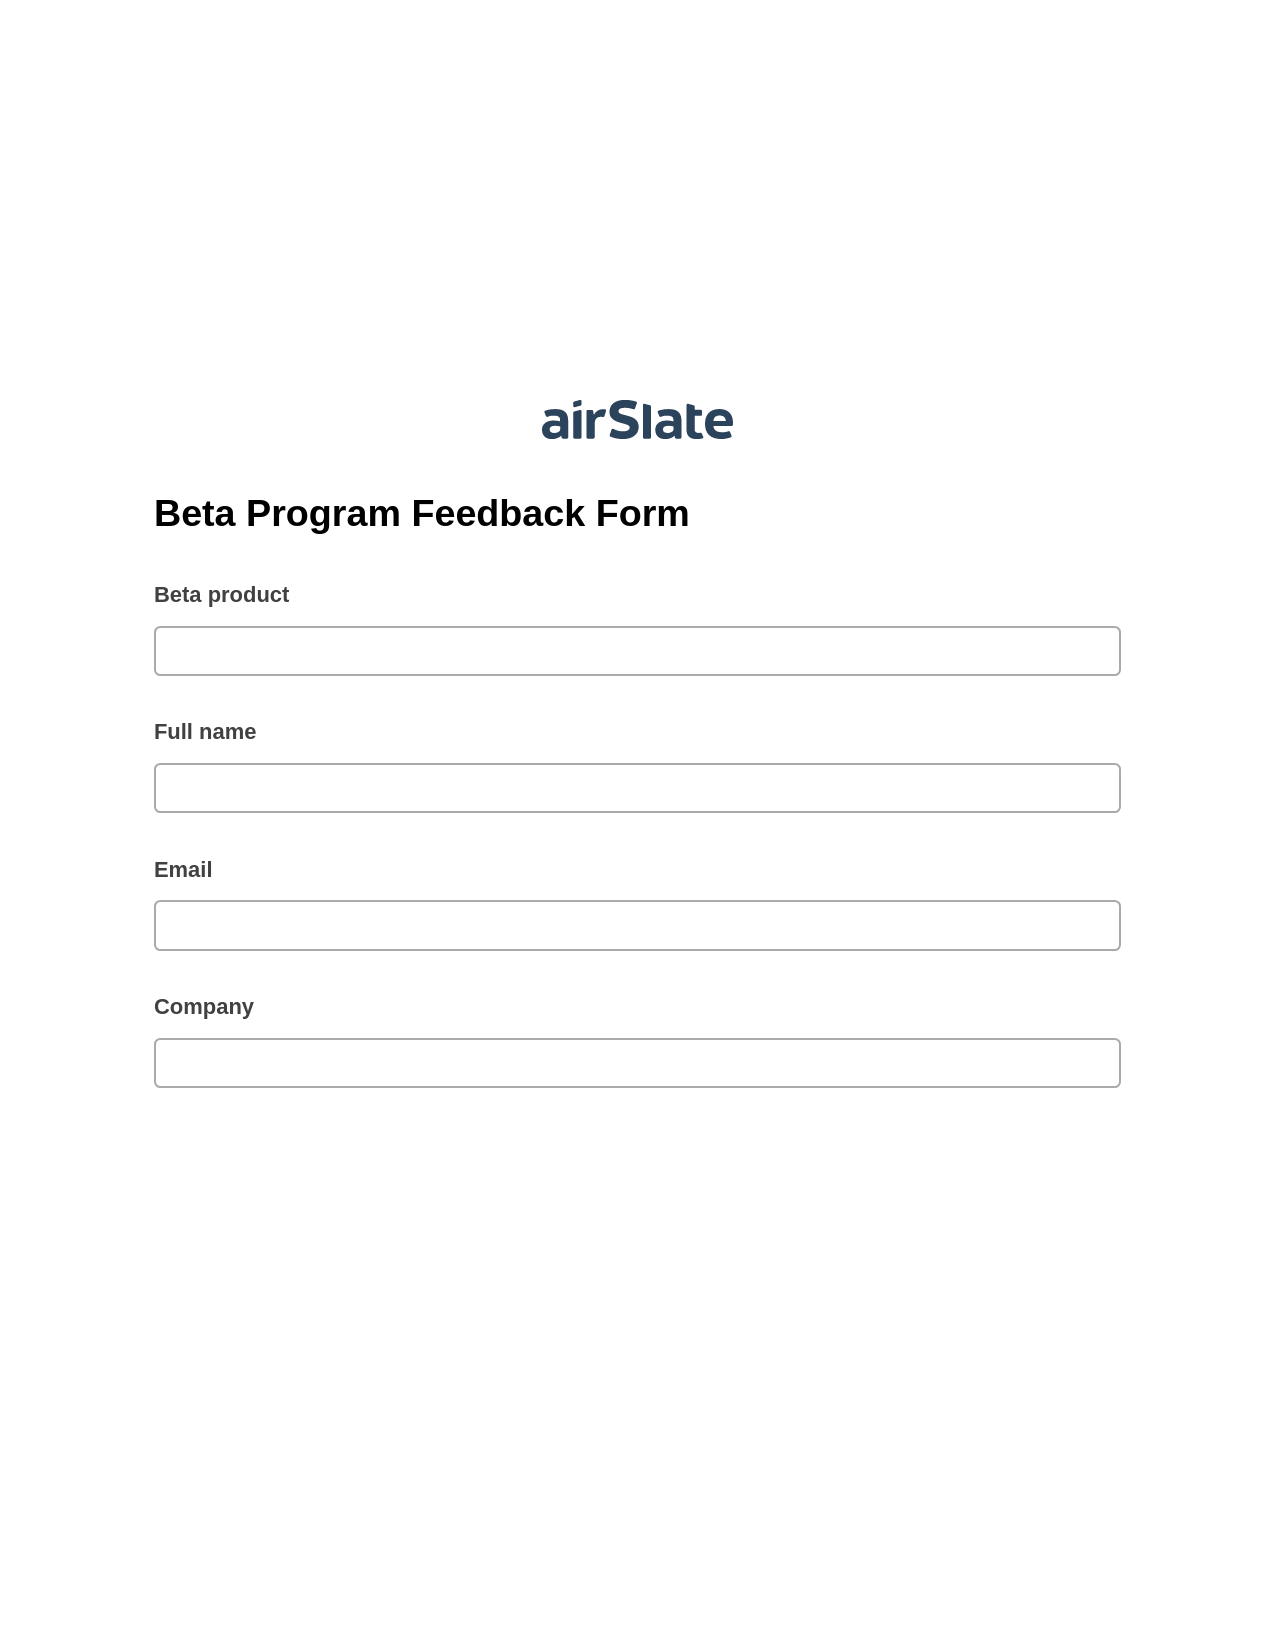 Multirole Beta Program Feedback Form Pre-fill from another Slate Bot, SendGrid send Campaign bot, Export to Smartsheet